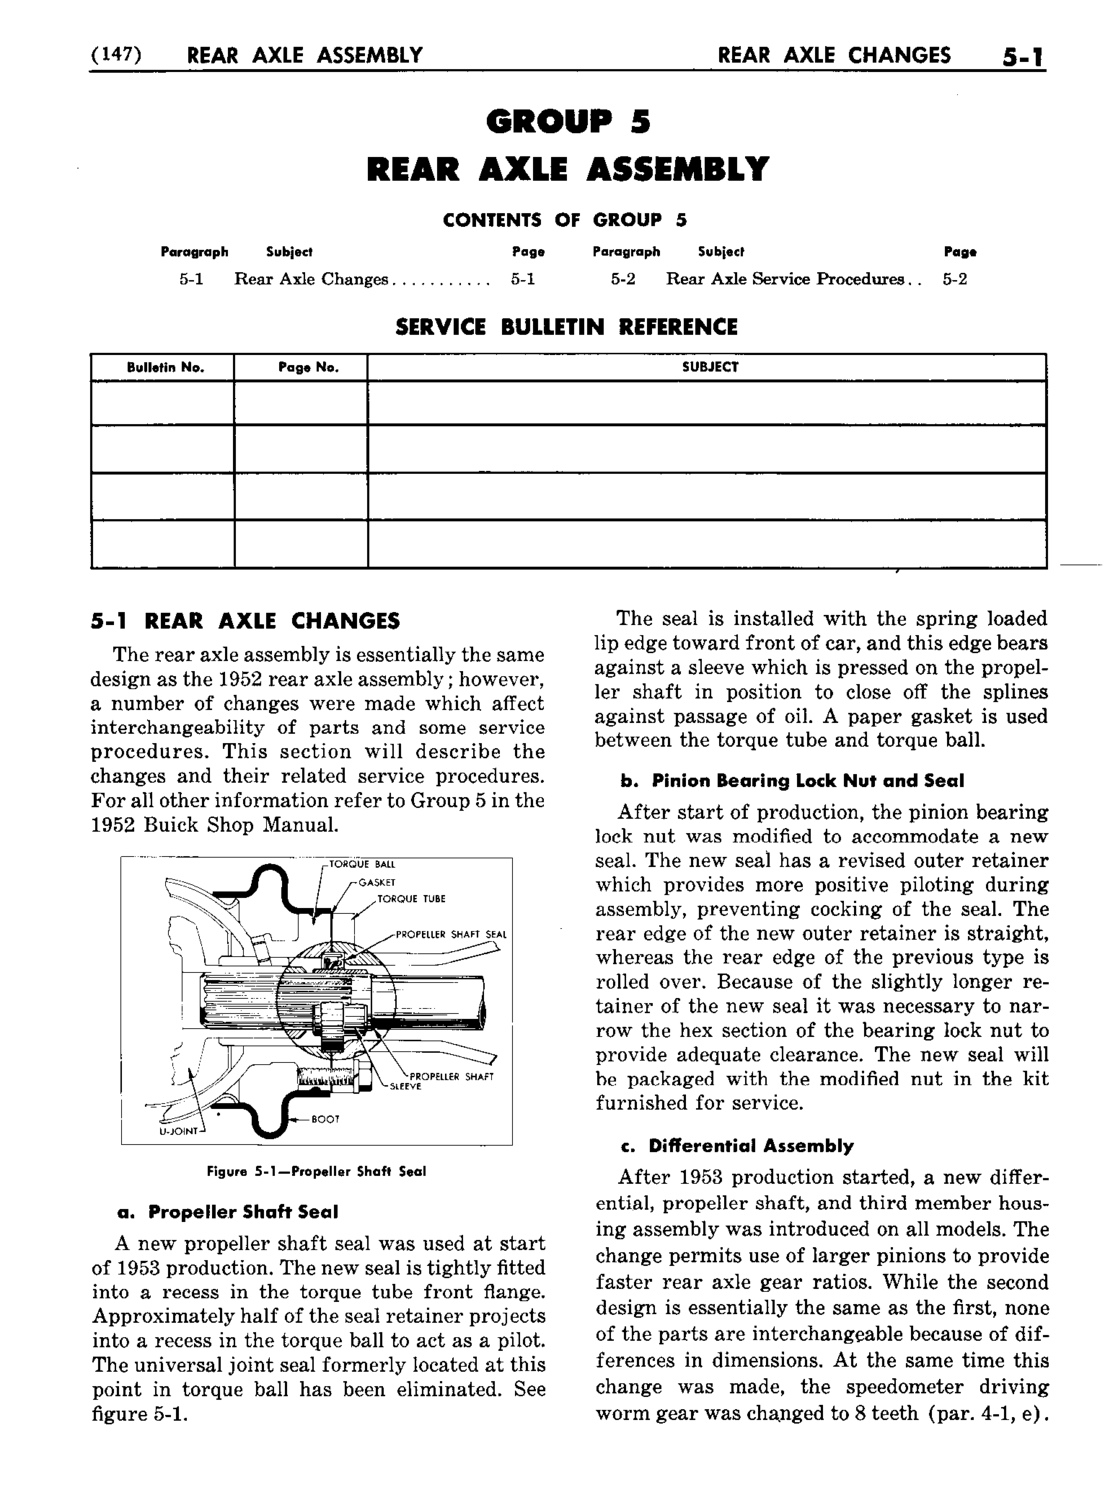 n_06 1953 Buick Shop Manual - Rear Axle-001-001.jpg